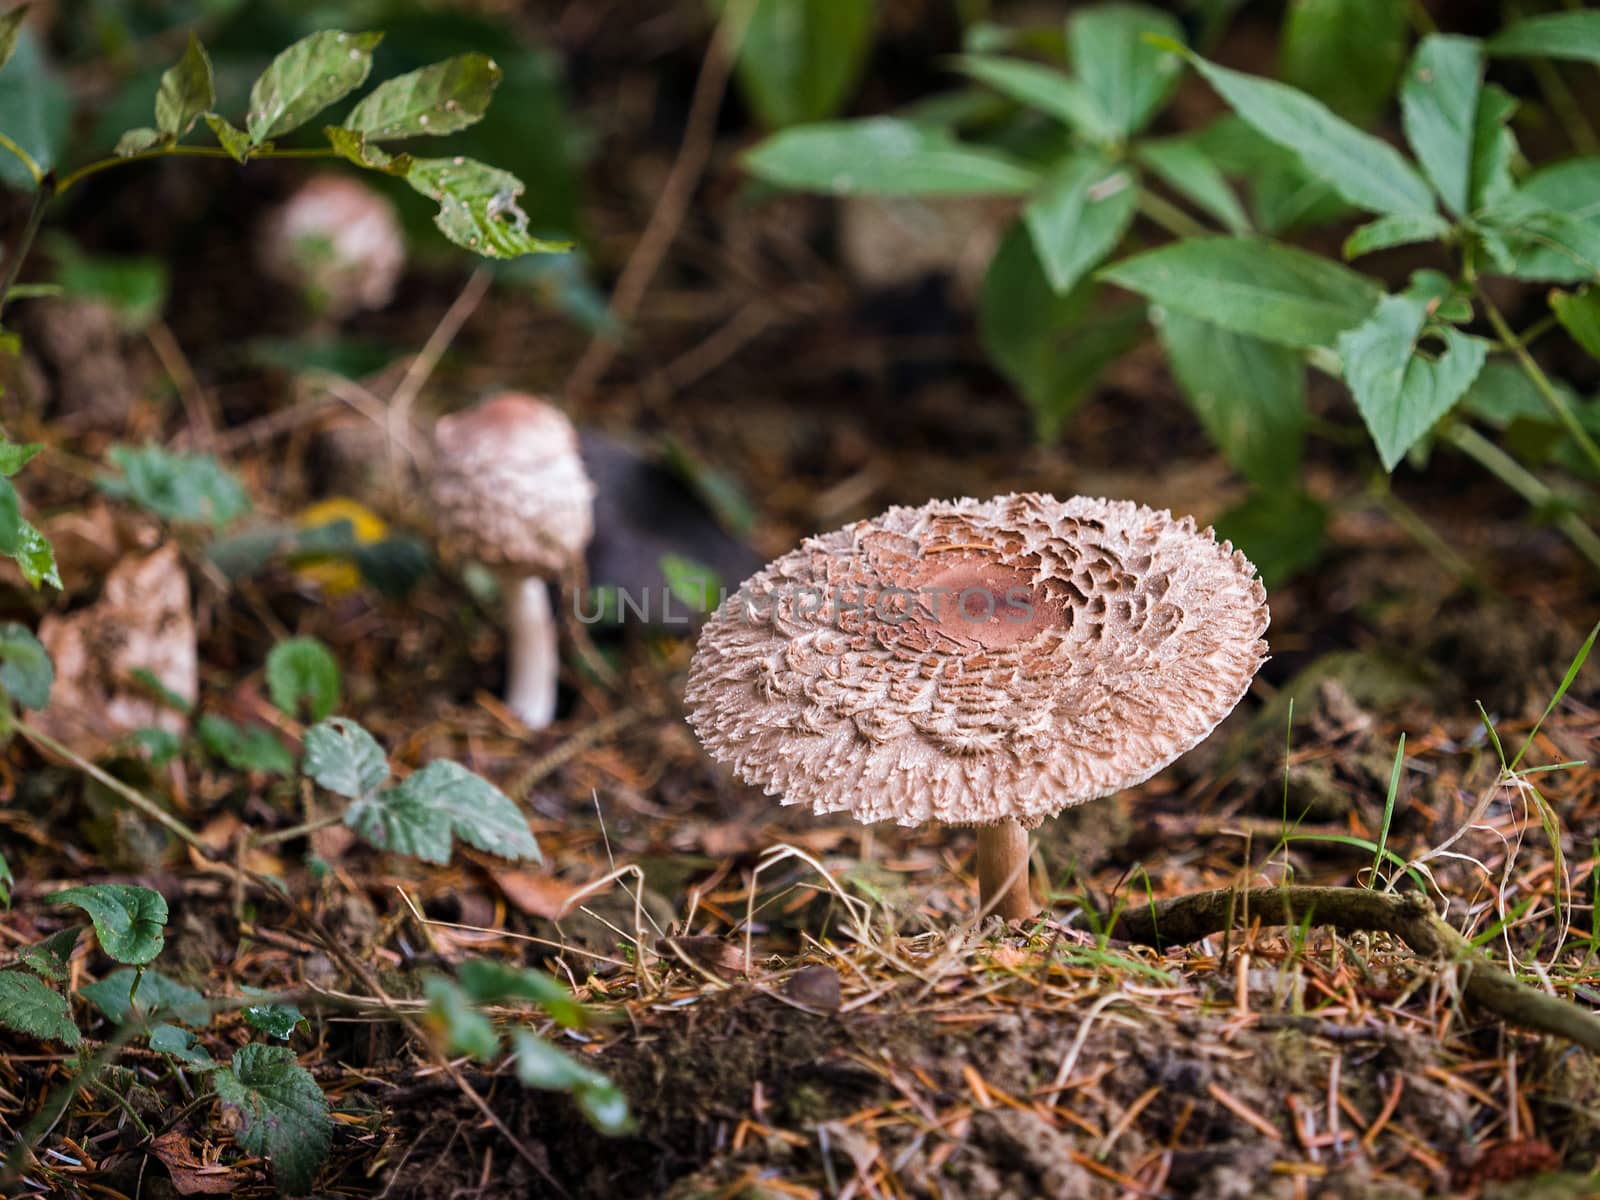 Weathered Fungus at Warnham Nature Reserve